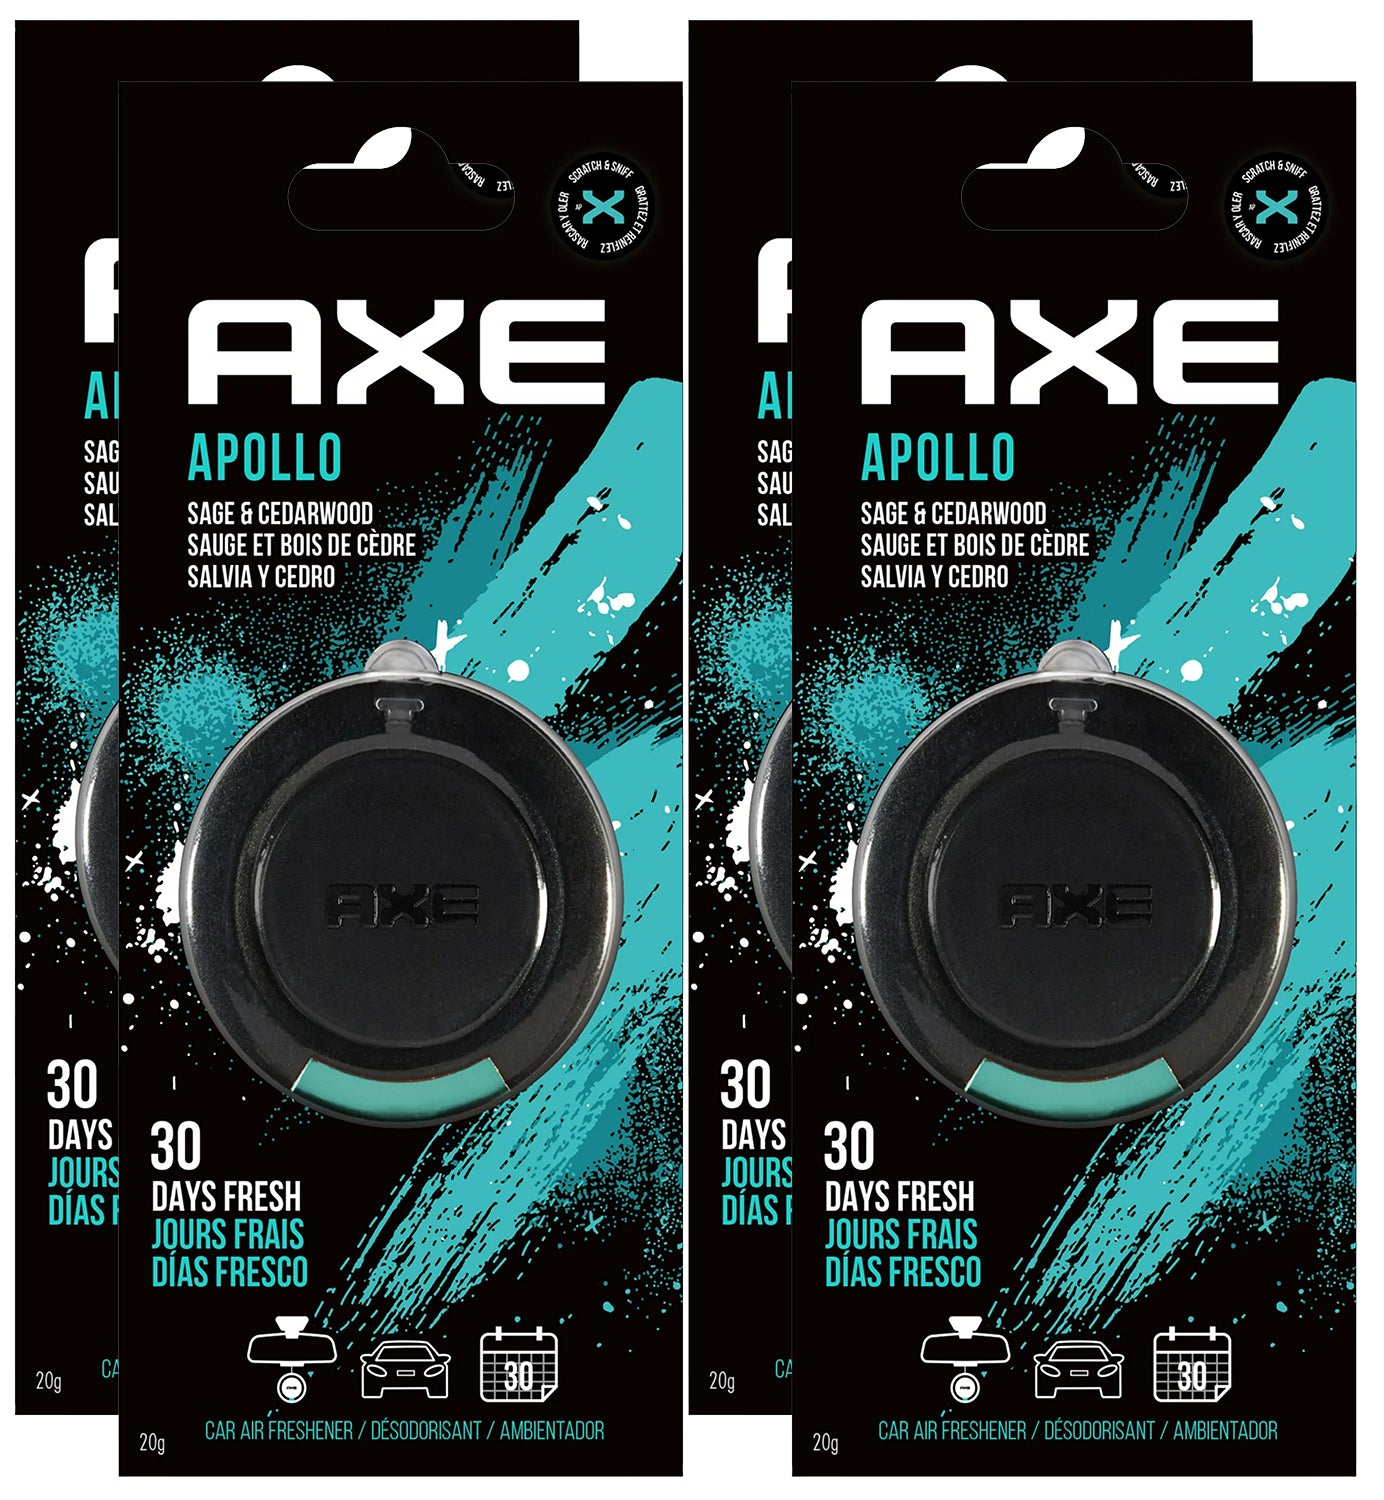 AXE Apollo Gel Can Car Air Freshener